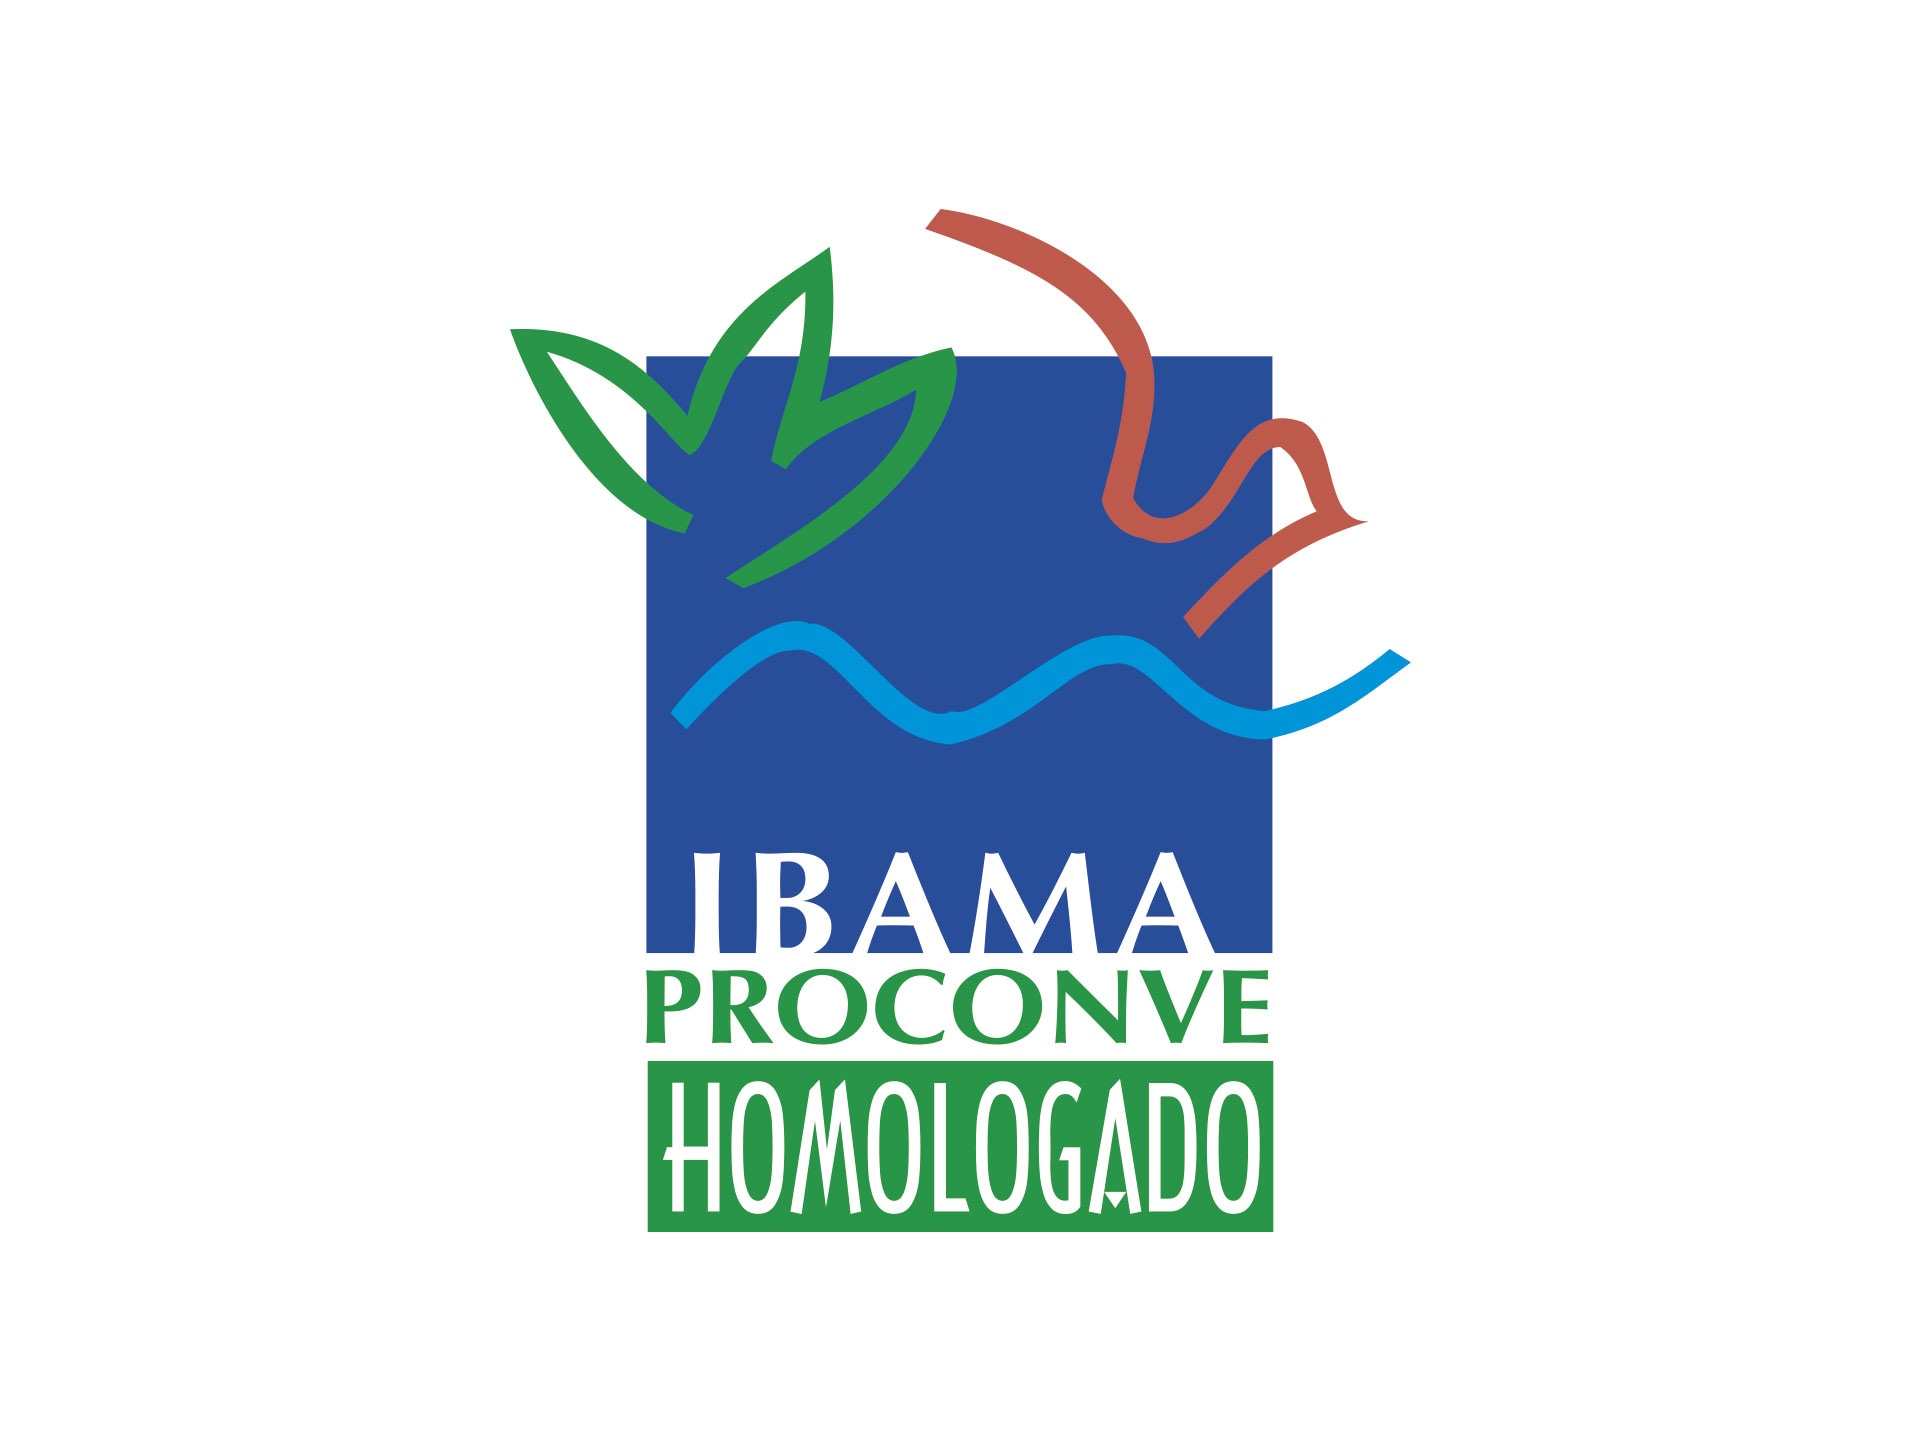 IBAMA PROCONVE HOMOLOGADO